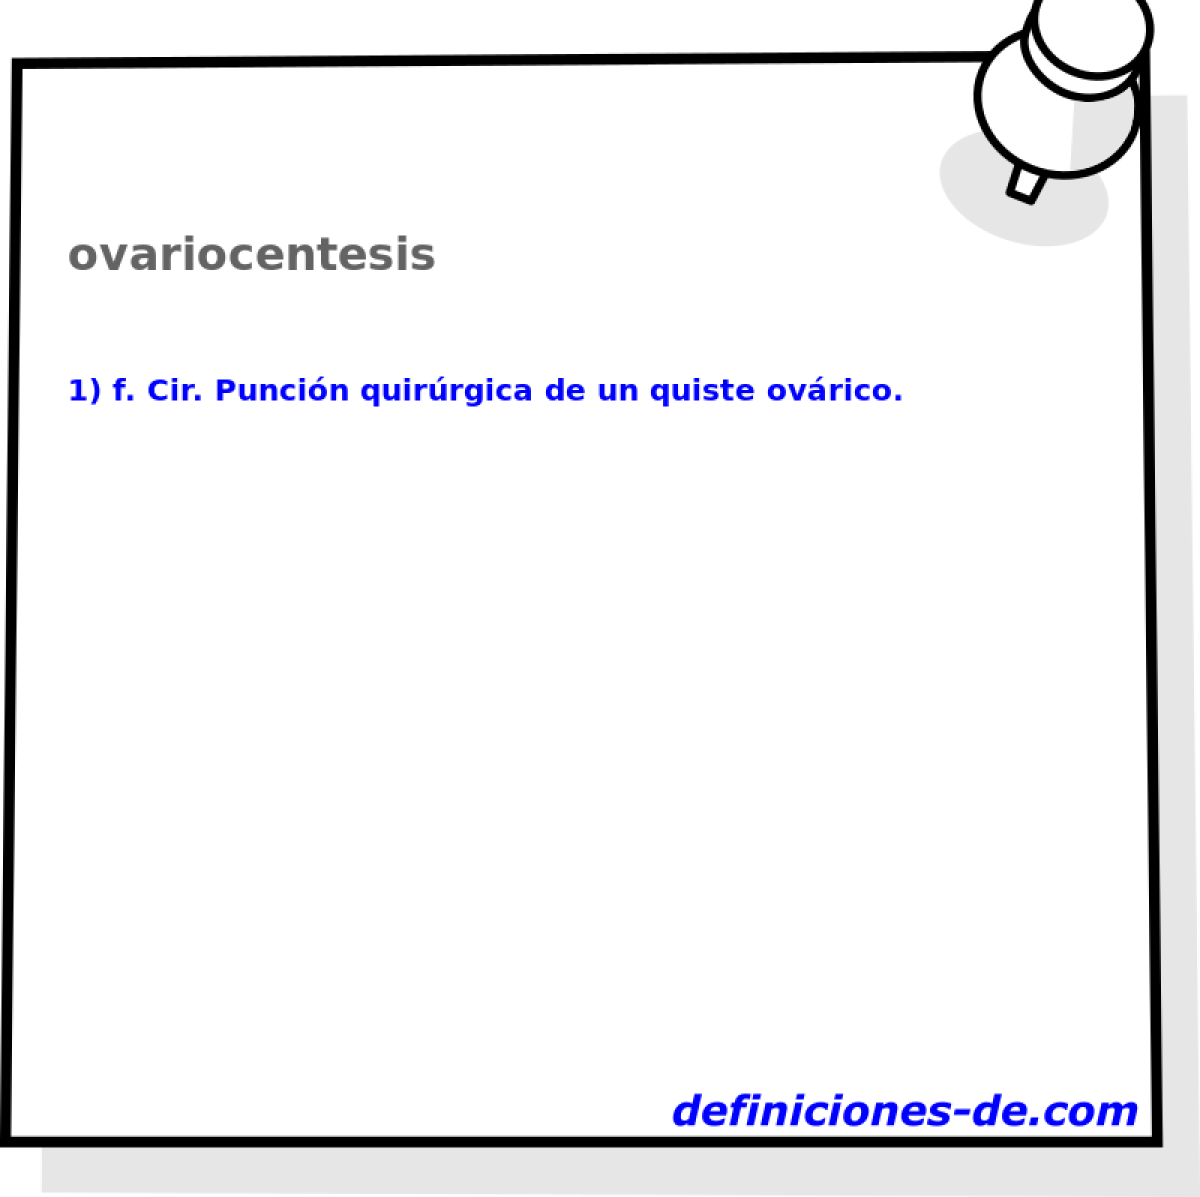 ovariocentesis 